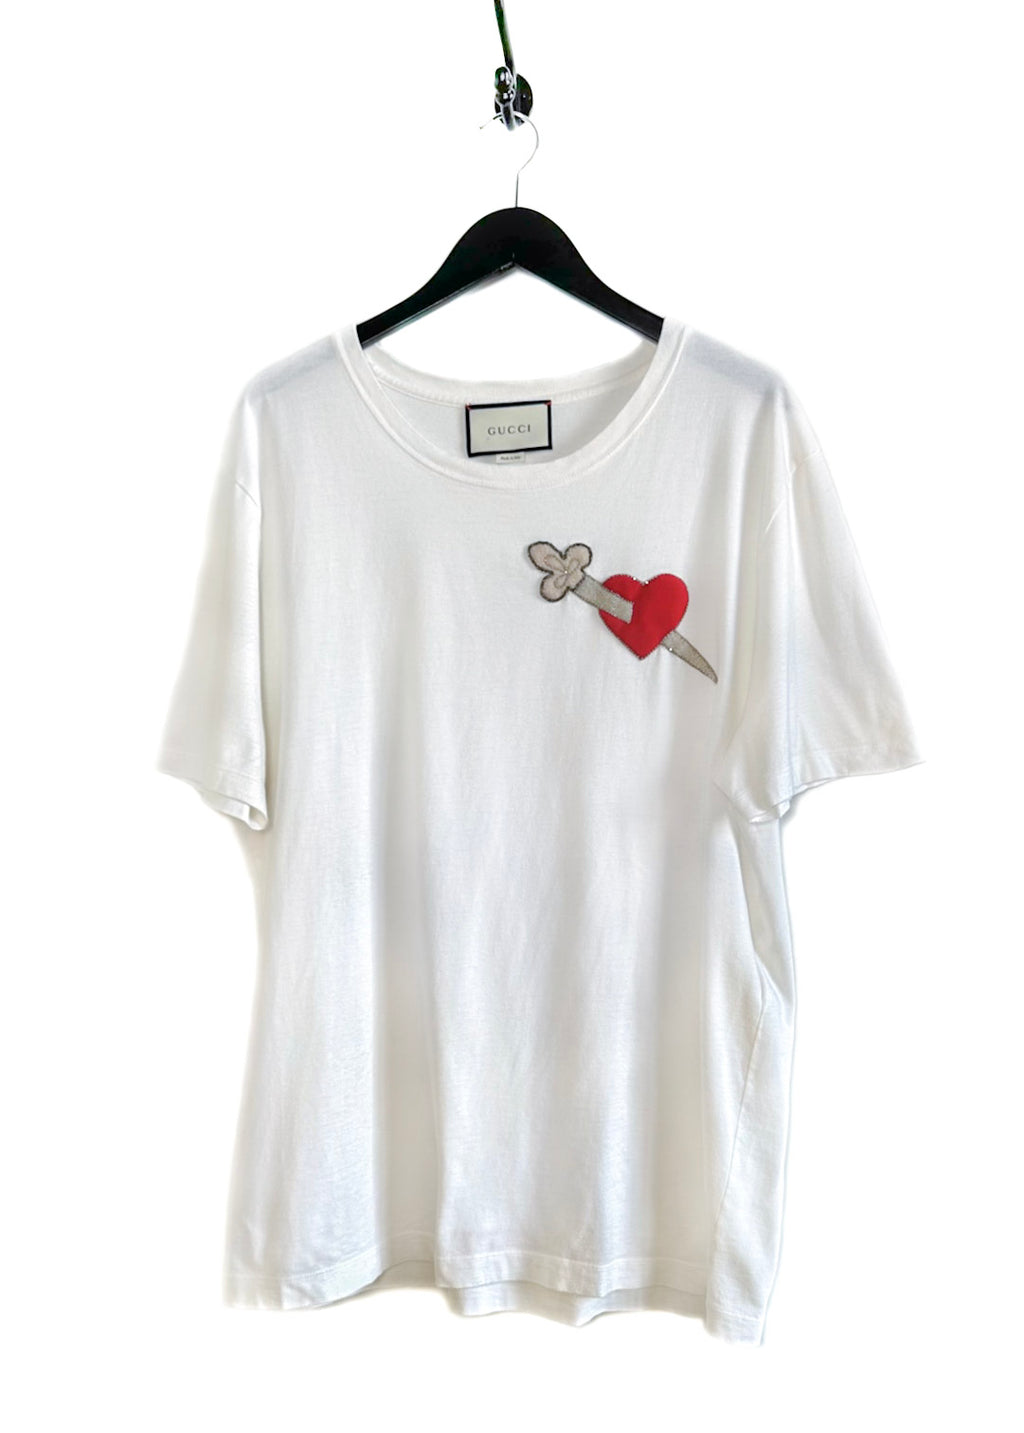 T-shirt blanc brodé coeur et poignard Gucci LOVED